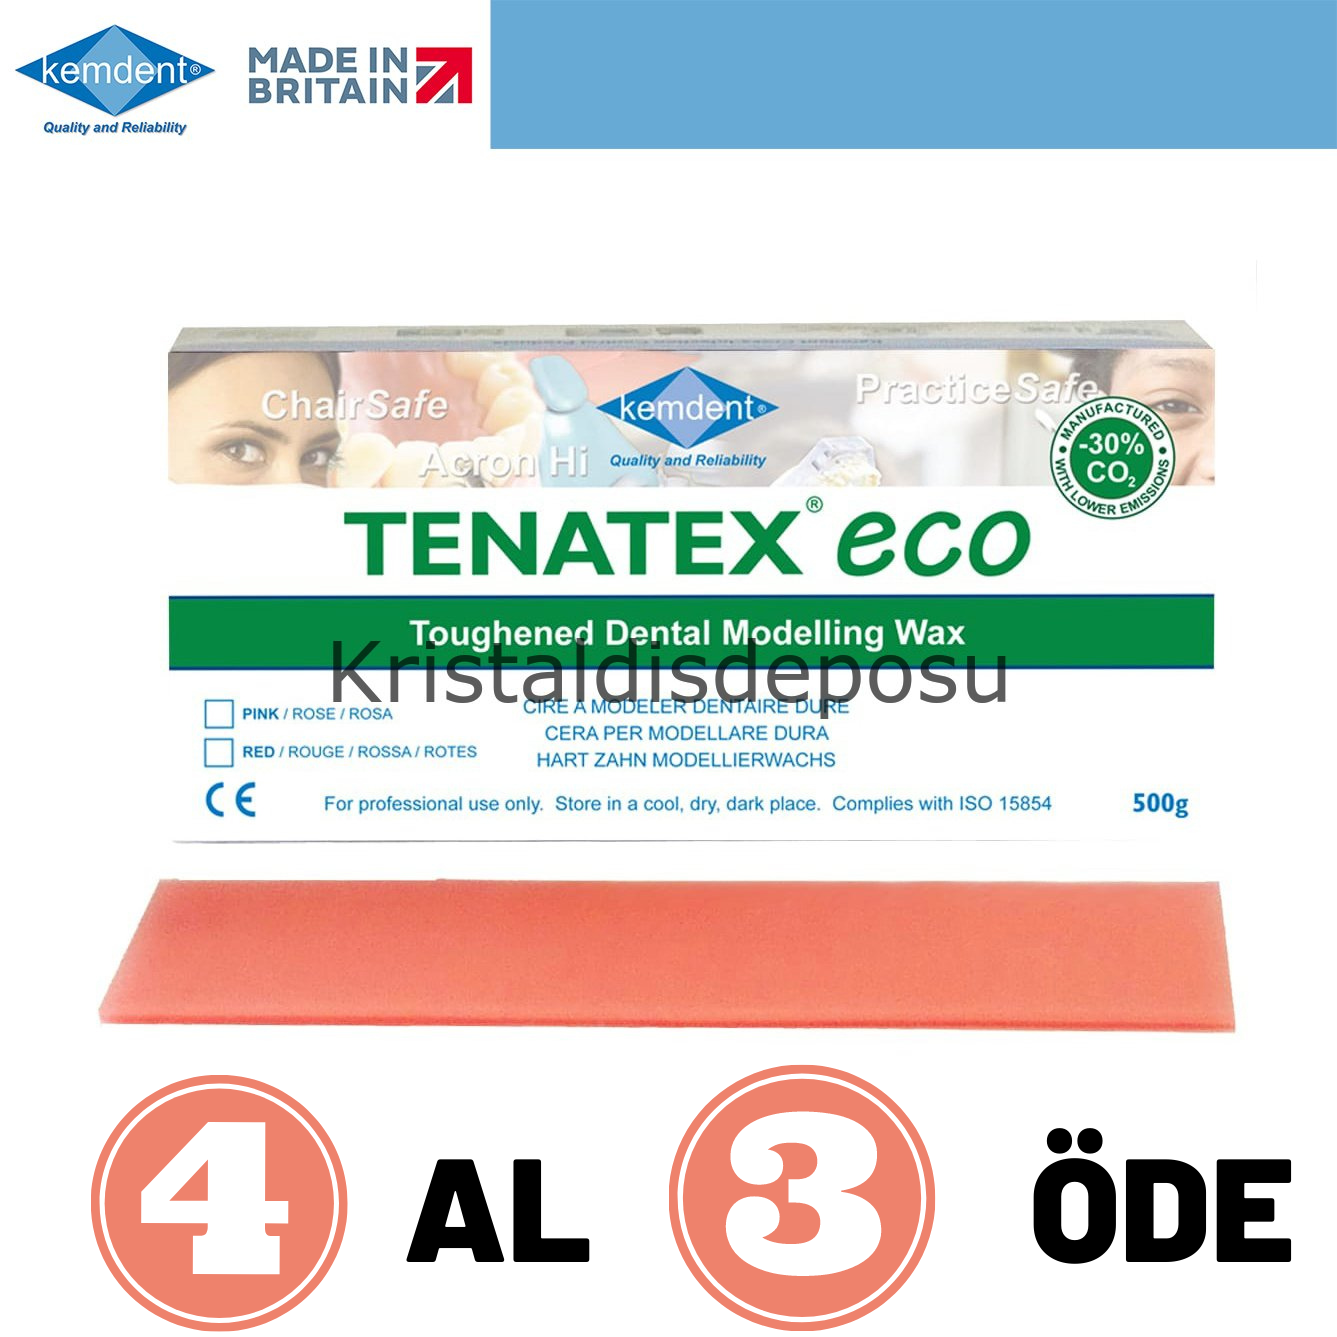 Tanetex Eco Modelaj Pembe Plak Mum 4 Al 3 Öde Kampanyası